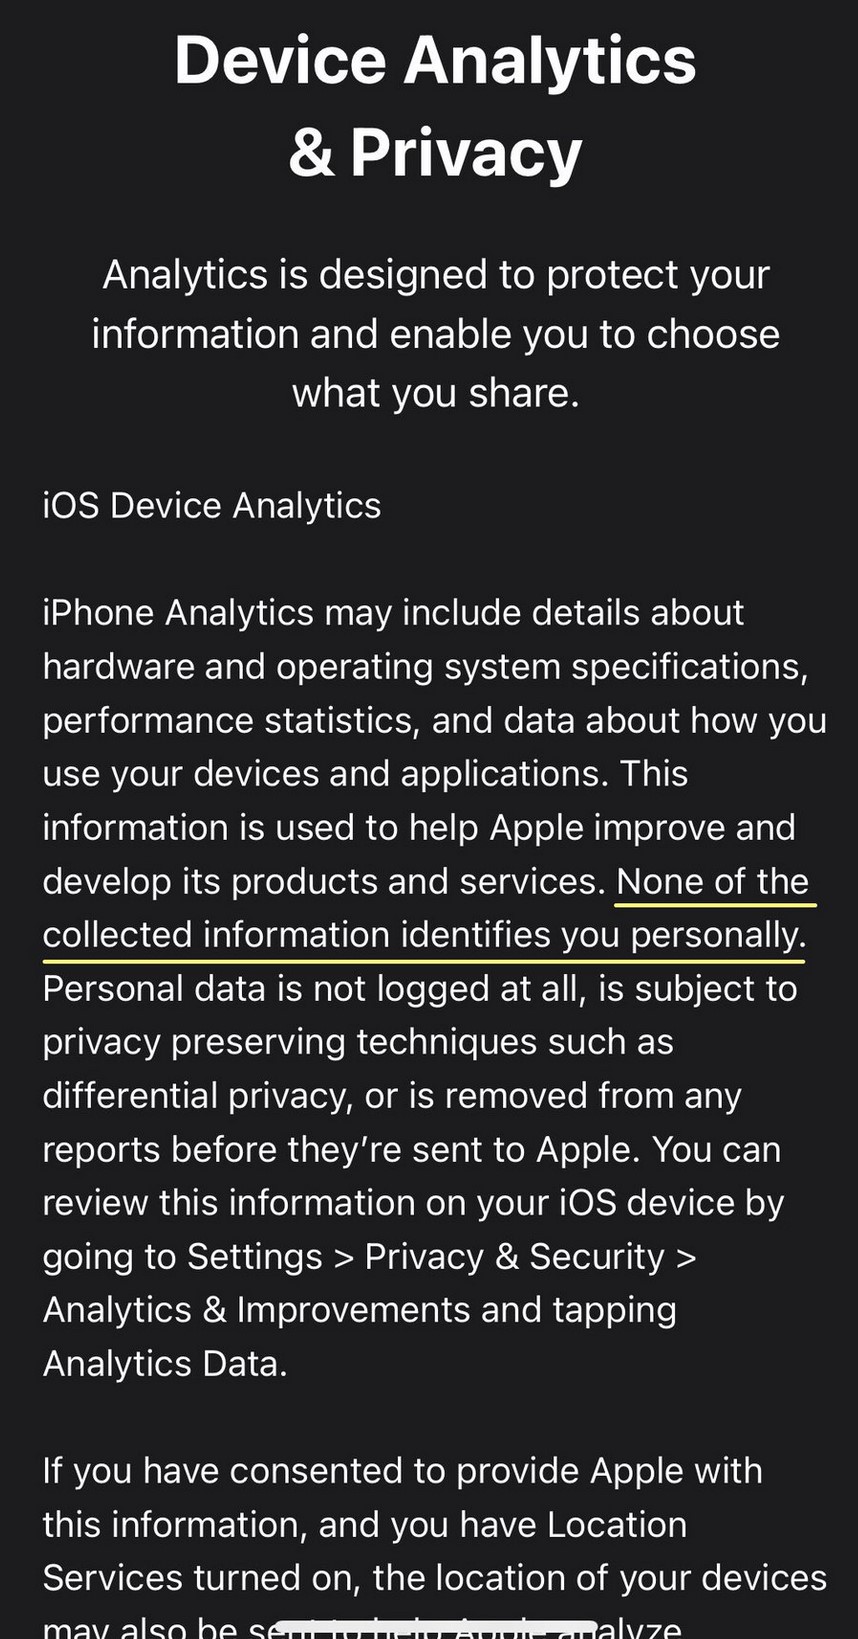 Apple caught spying